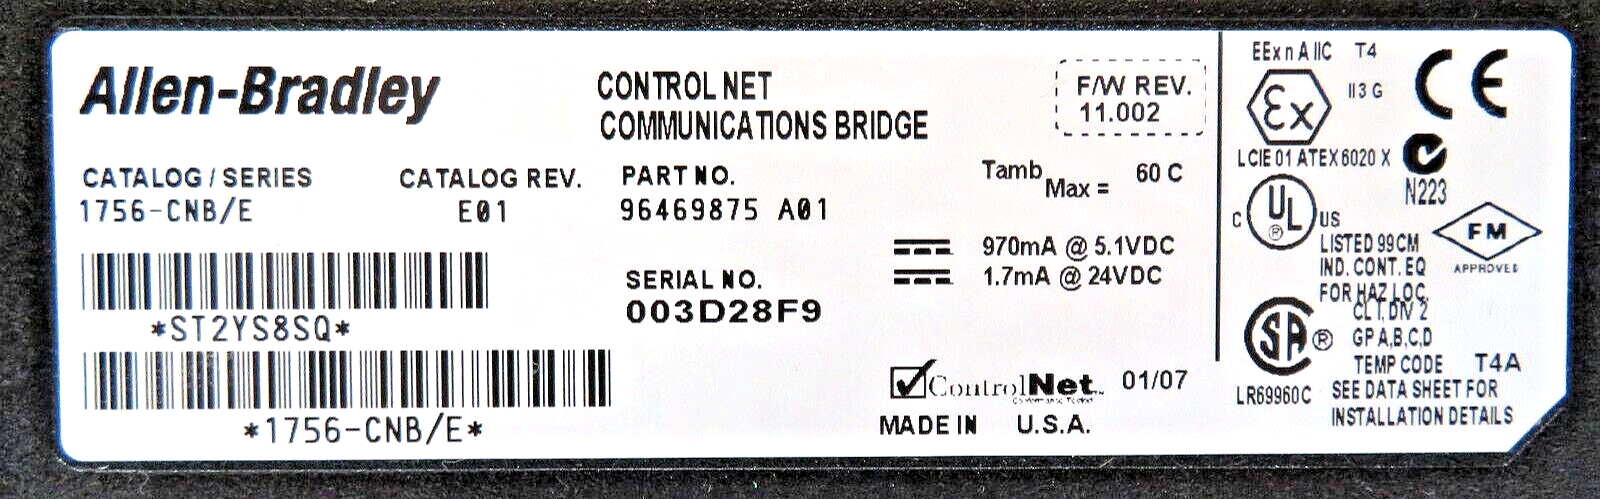 Allen-Bradley 1756-CNB/E ControlLogix Control Net 1-Port Communications Bridge